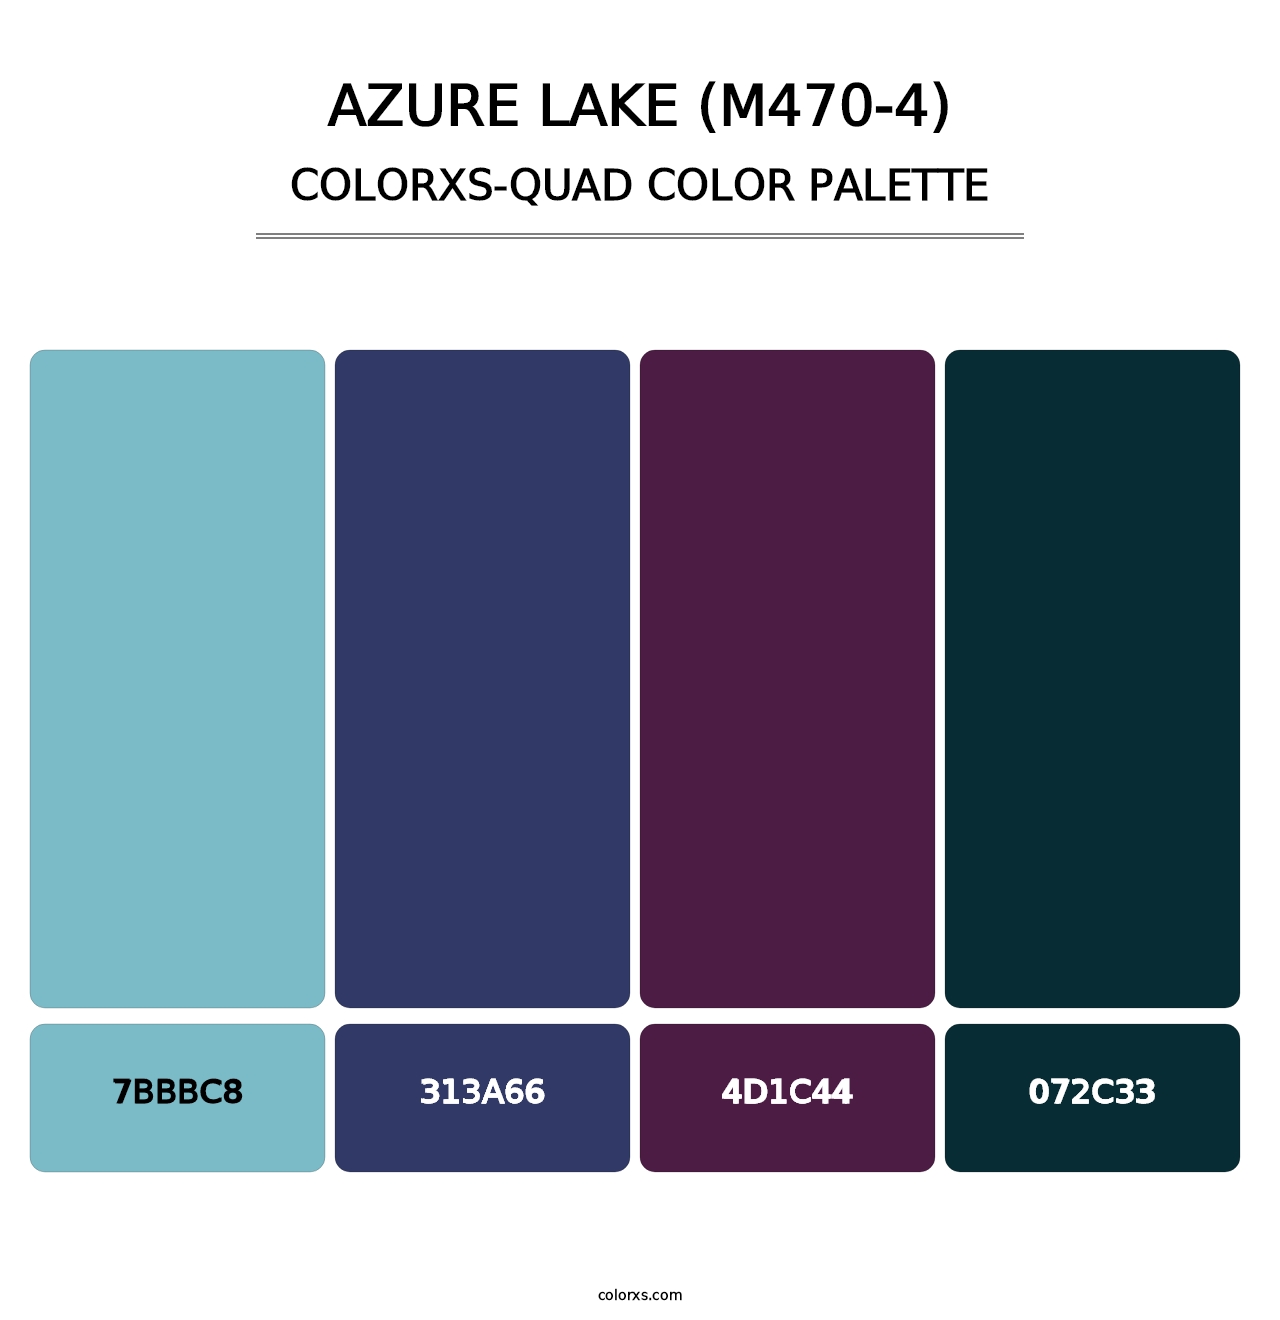 Azure Lake (M470-4) - Colorxs Quad Palette